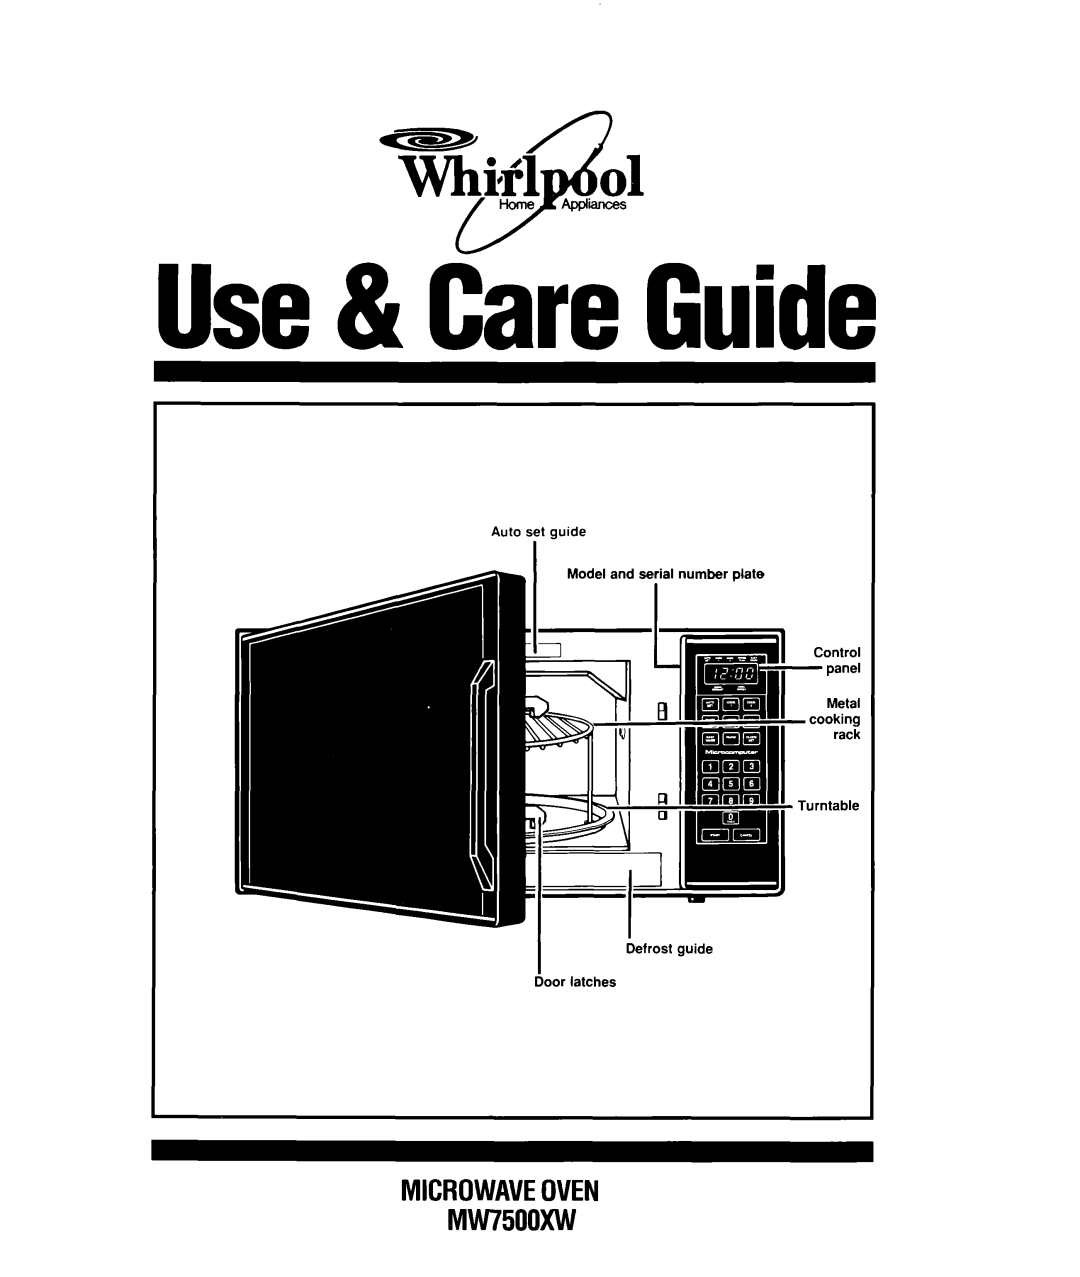 Whirlpool manual Vbfl 01 Home Appliis 4a, MICROWAVEOVEN MW7500XW, Use& CareGuide 